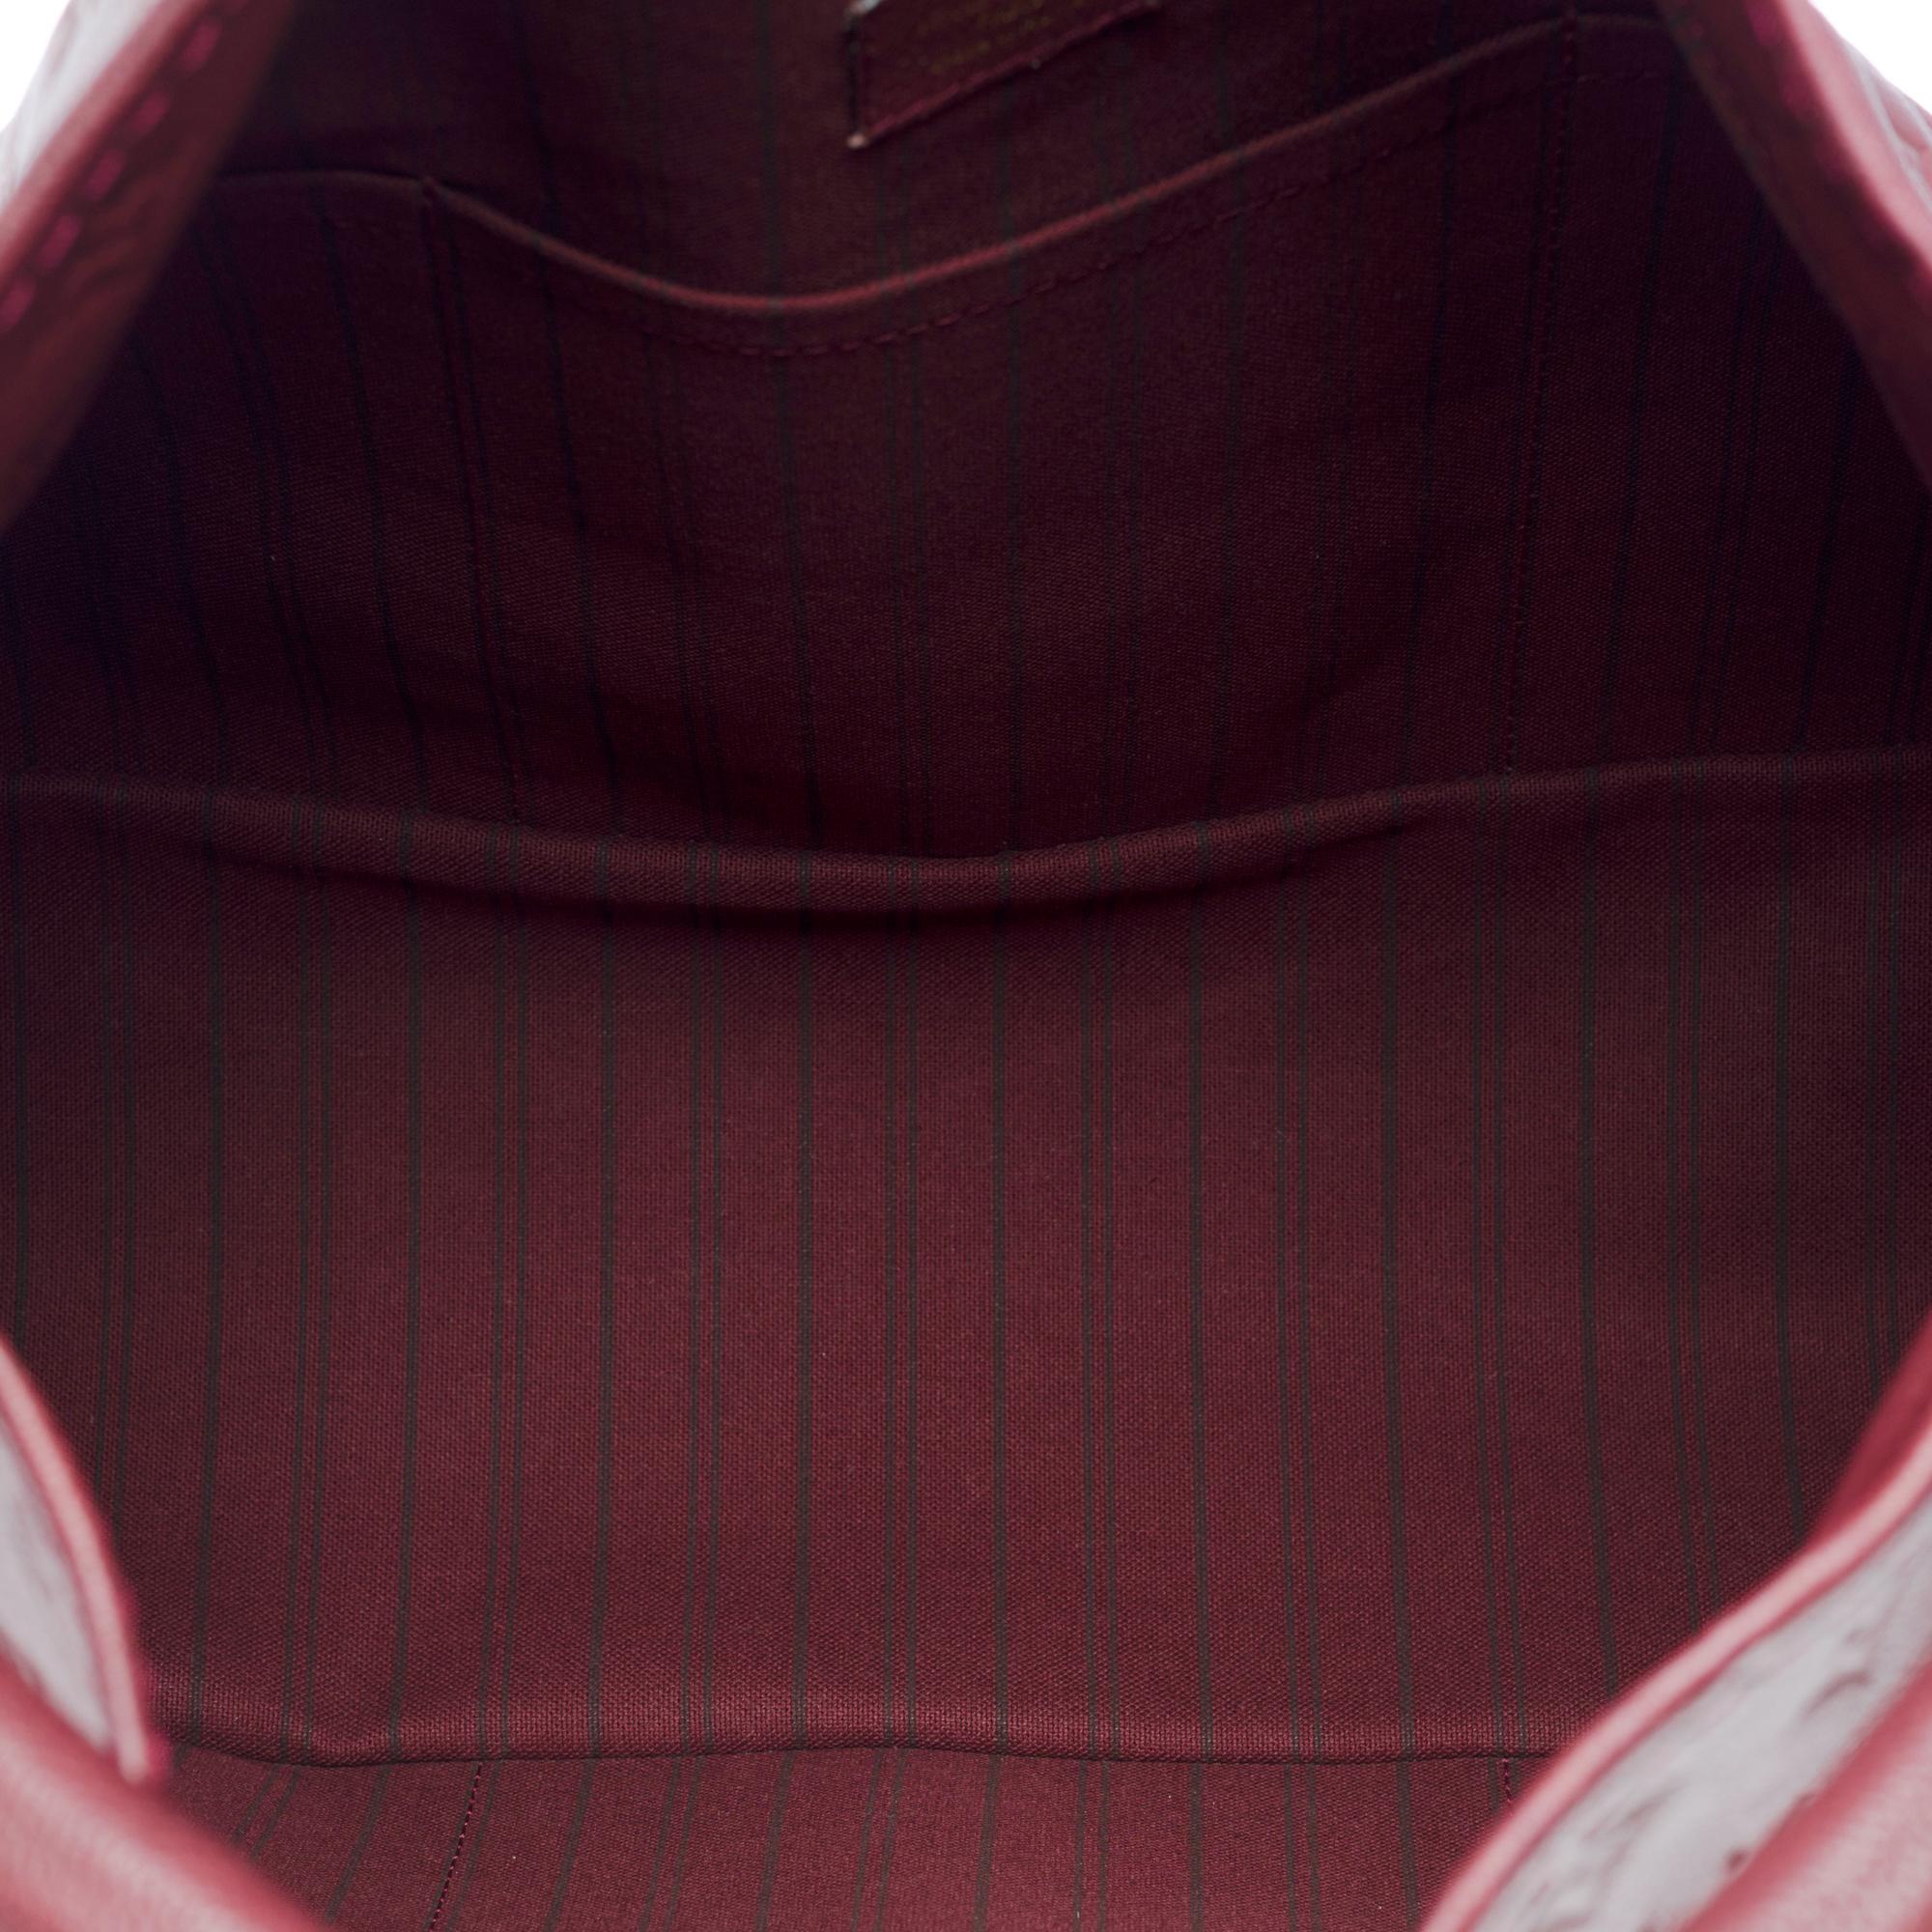 Louis Vuitton Artsy MM Hobo bag in Burgundy Monogram calfskin leather, GHW For Sale 3